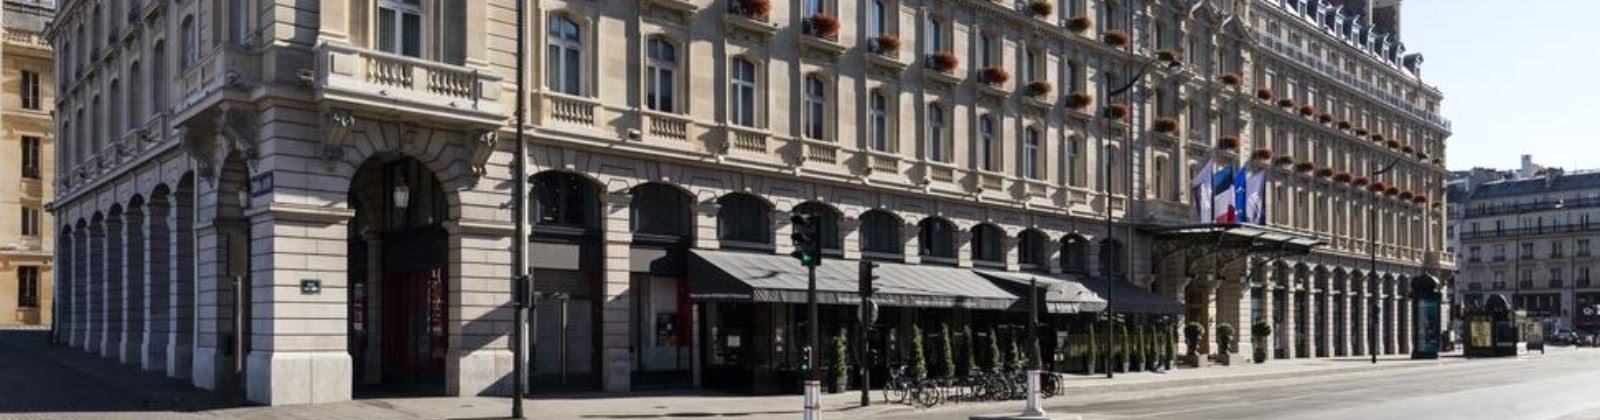 OLEVENE image - hilton-paris-opera-olevene-restaurant-hotel-conference-